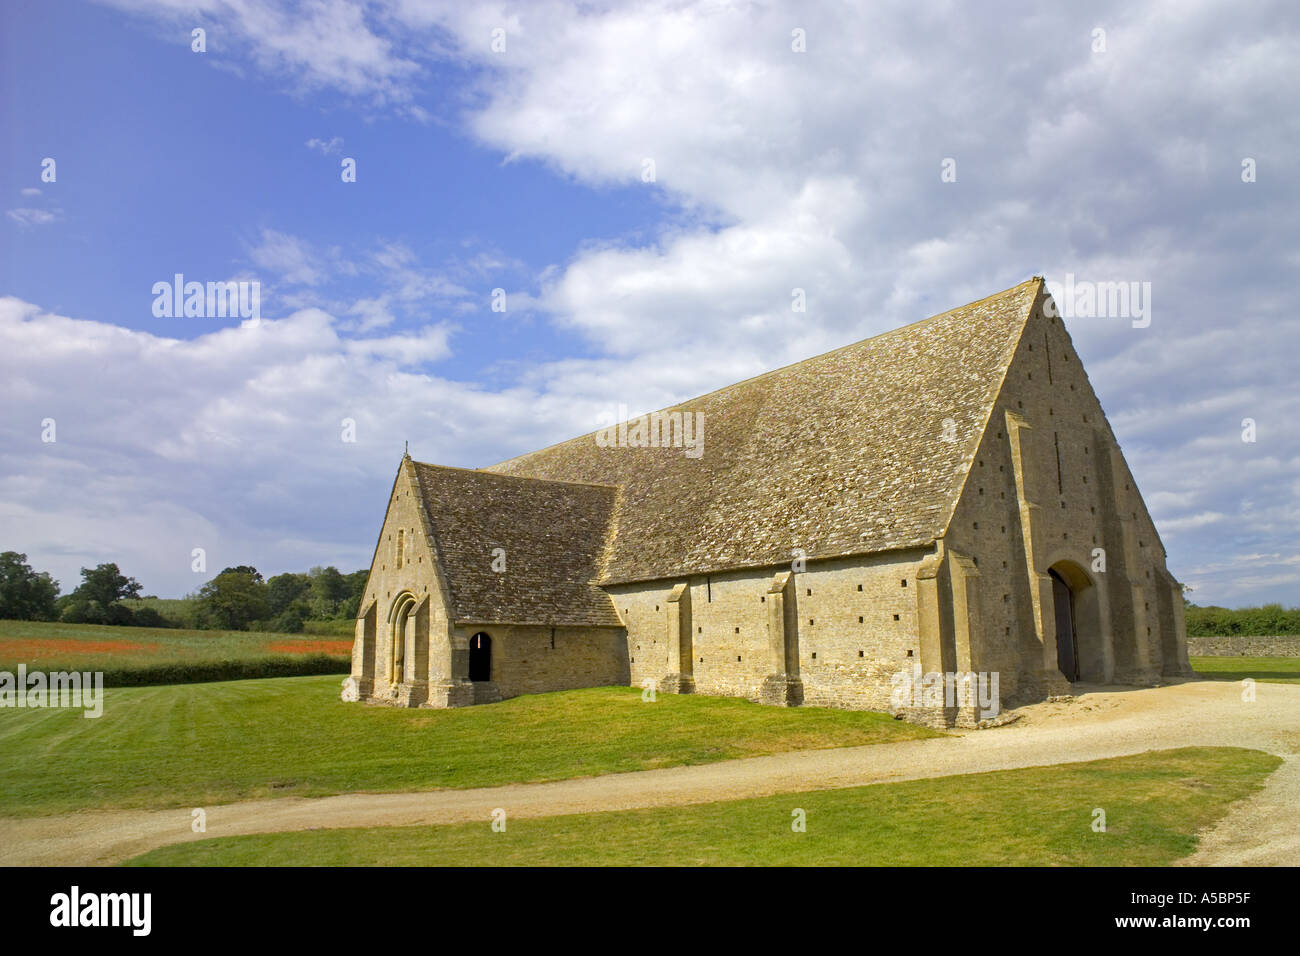 Great Coxwell 14th century medieval tithe or monastic grange storage barn near Faringdon Oxfordshire England UK JMH0435 Stock Photo